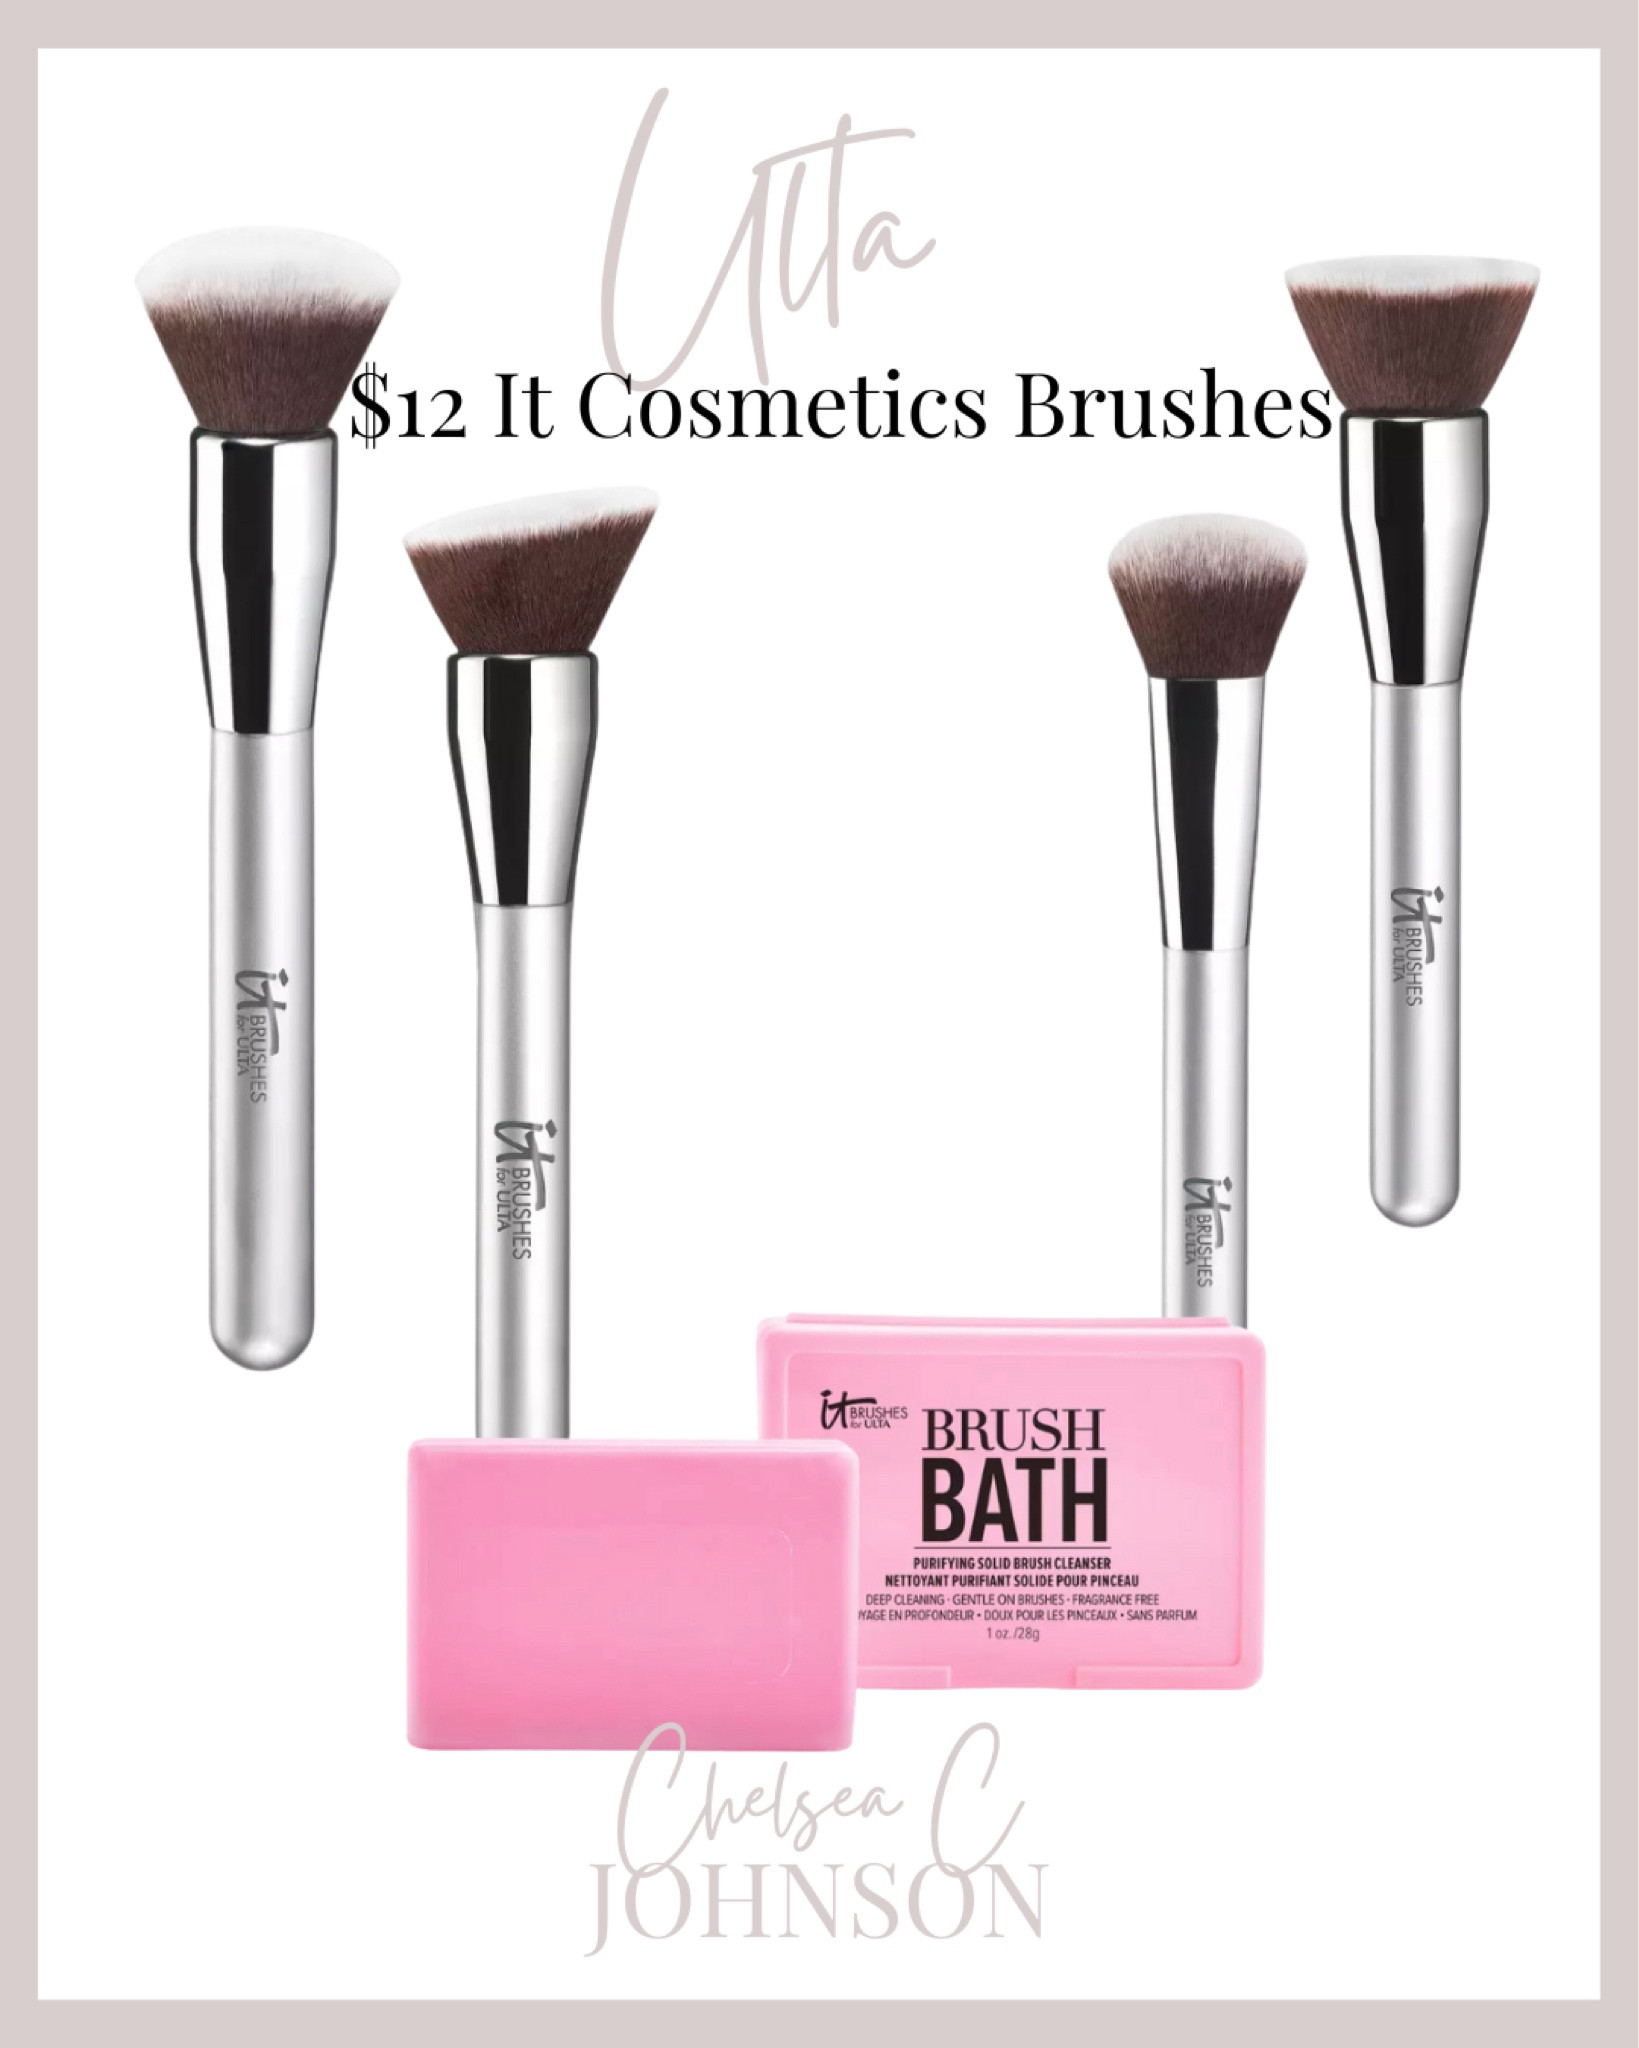 It Cosmetics Brushes For Ulta Brush Bath Purifying Solid Brush Cleanser -  1oz - Ulta Beauty : Target